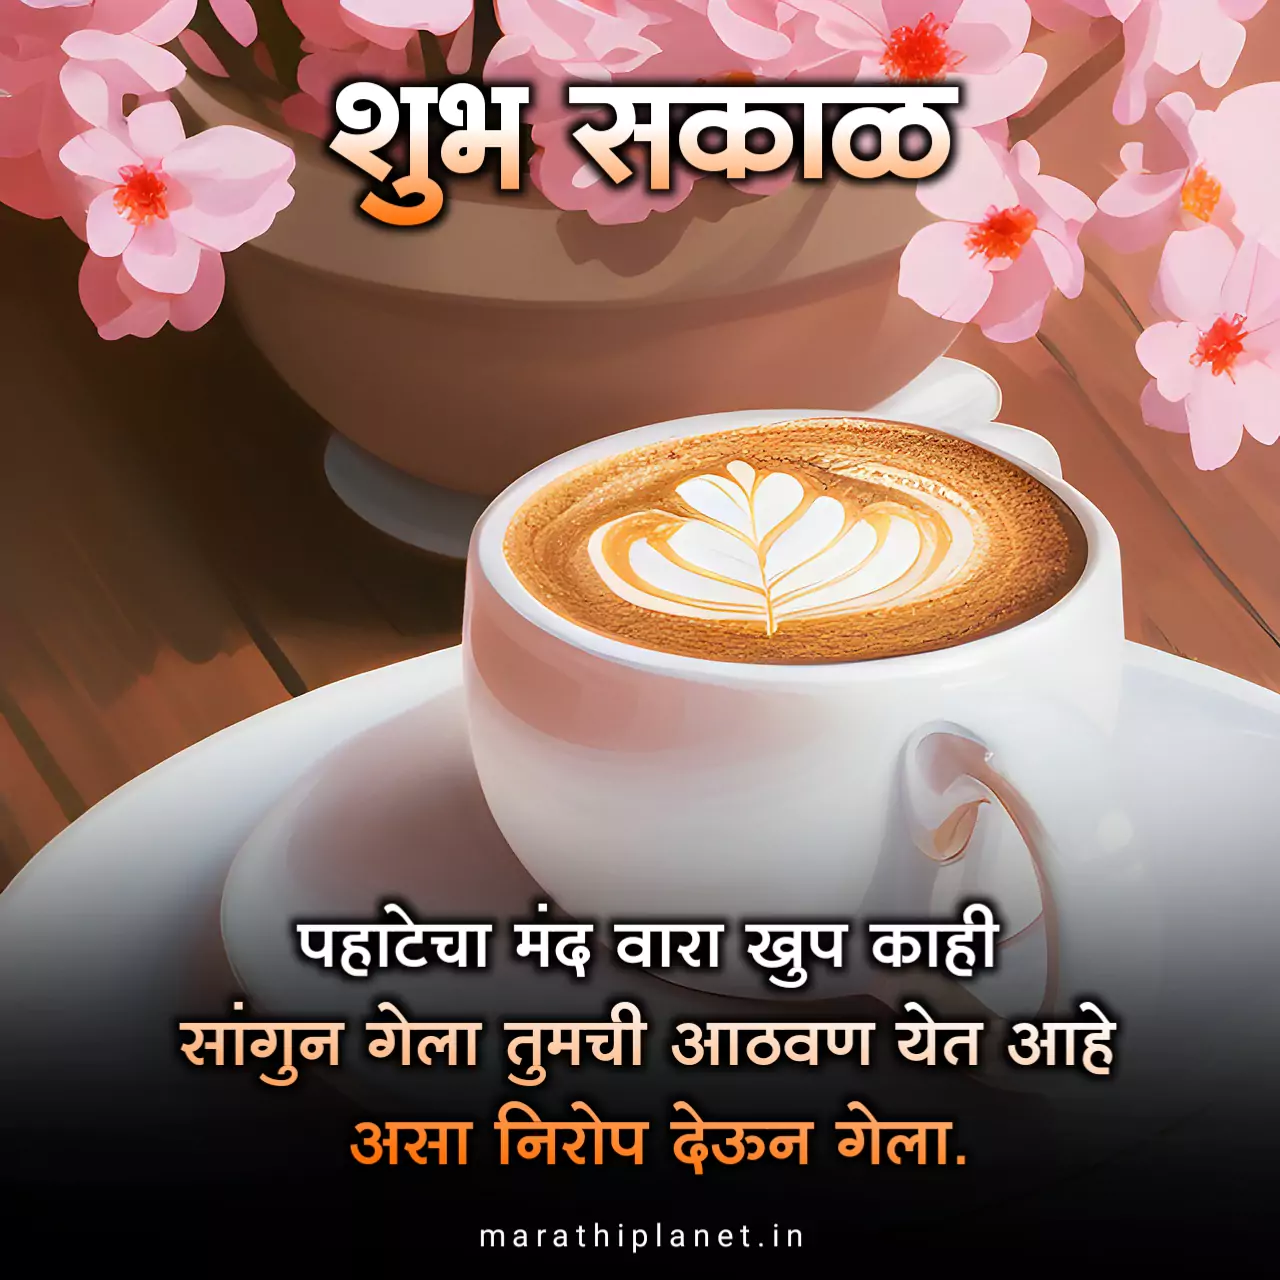 Good morning quotes in marathi, शुभ सकाळ शुभेच्छा मराठी